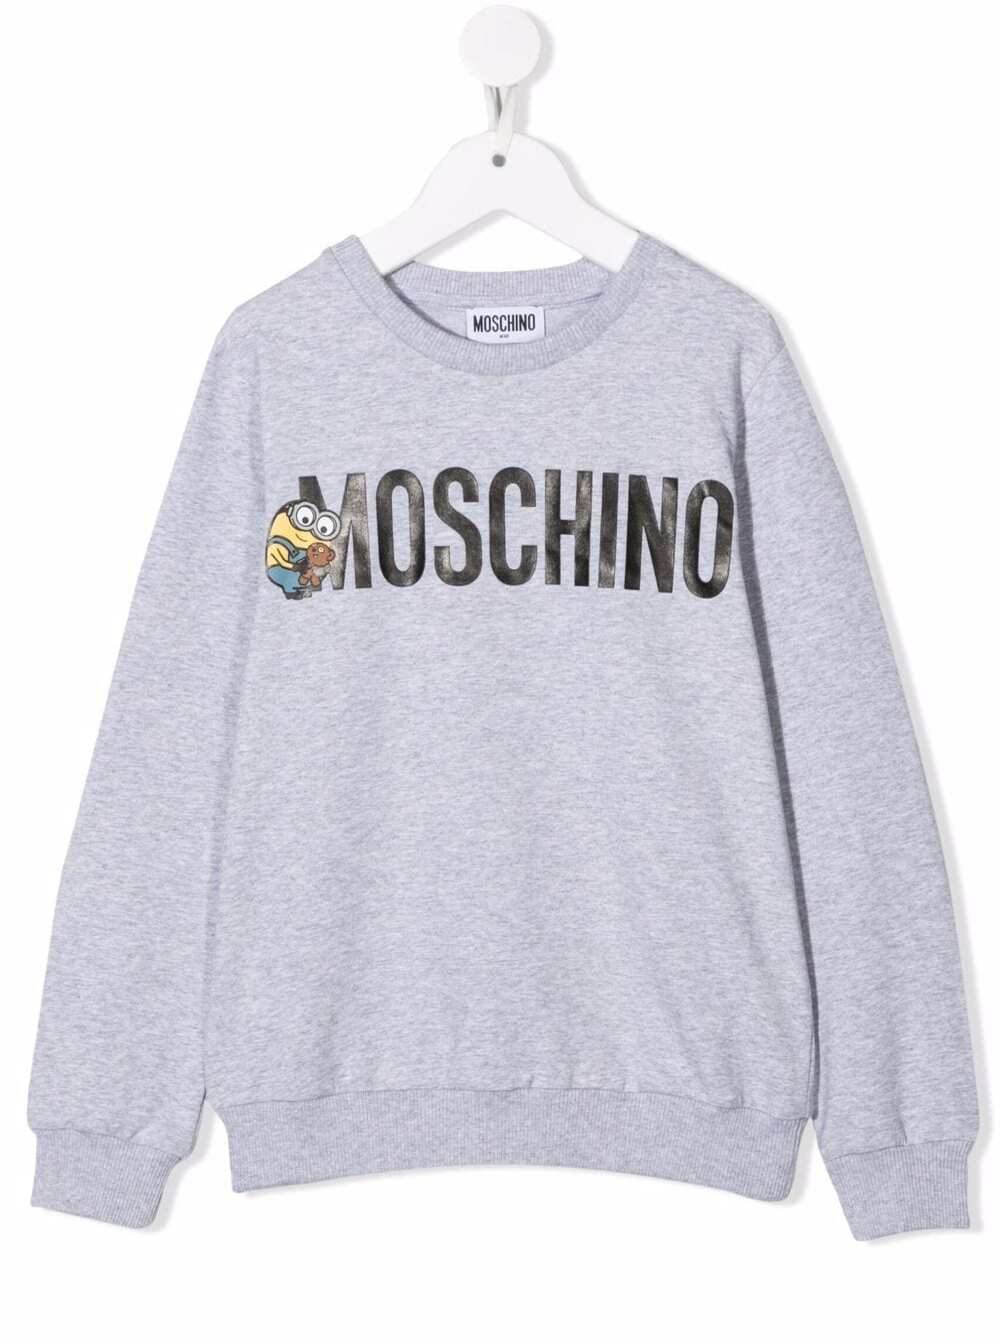 Moschino Kids Boys Addition Grey Jersey Sweatshirt